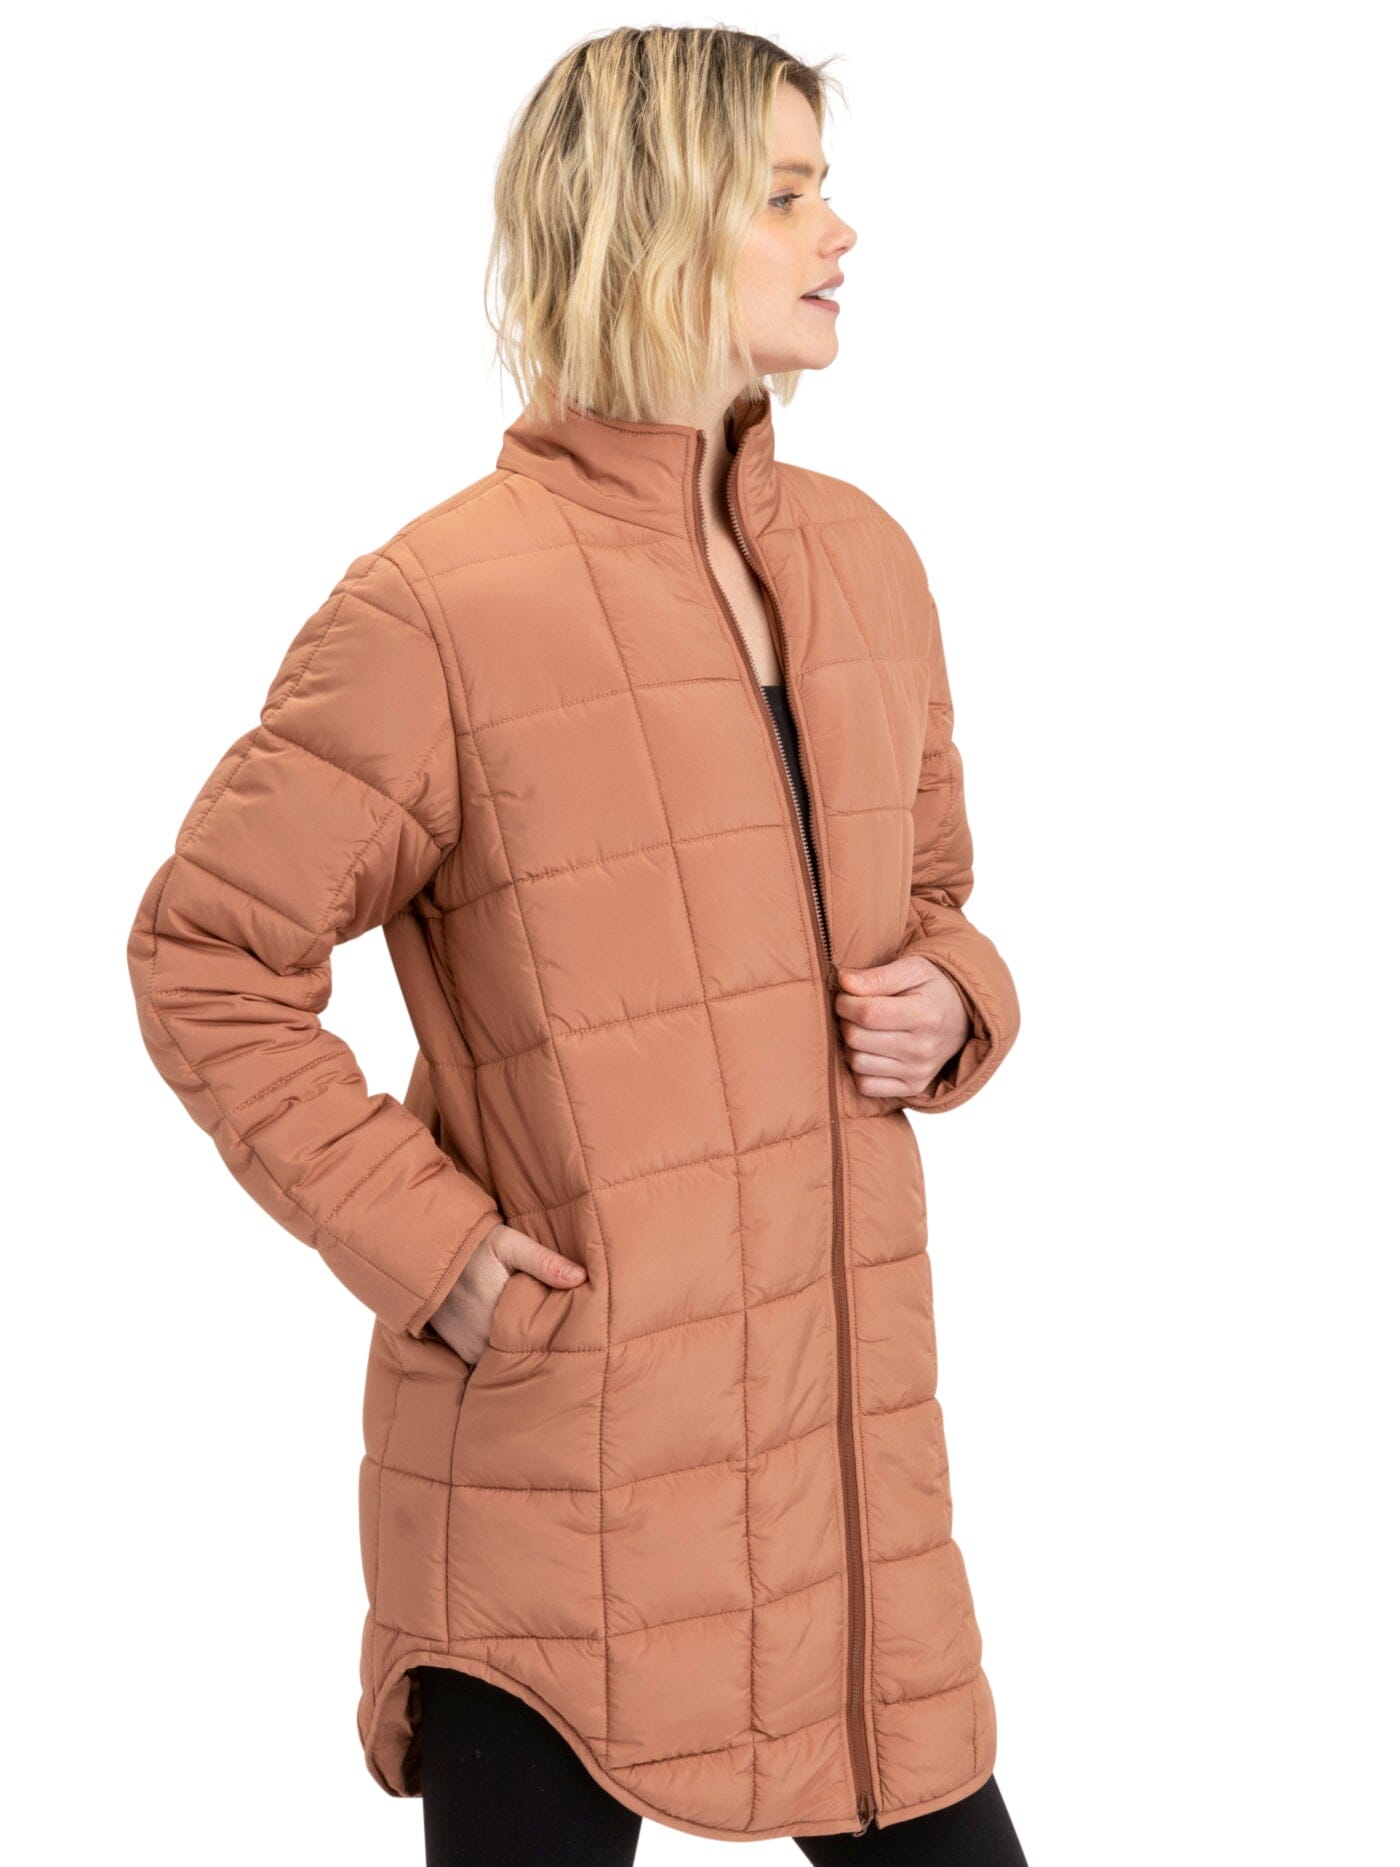 Azima Packable Long Puffer Jacket Womens Outerwear Jacket Threads 4 Thought 